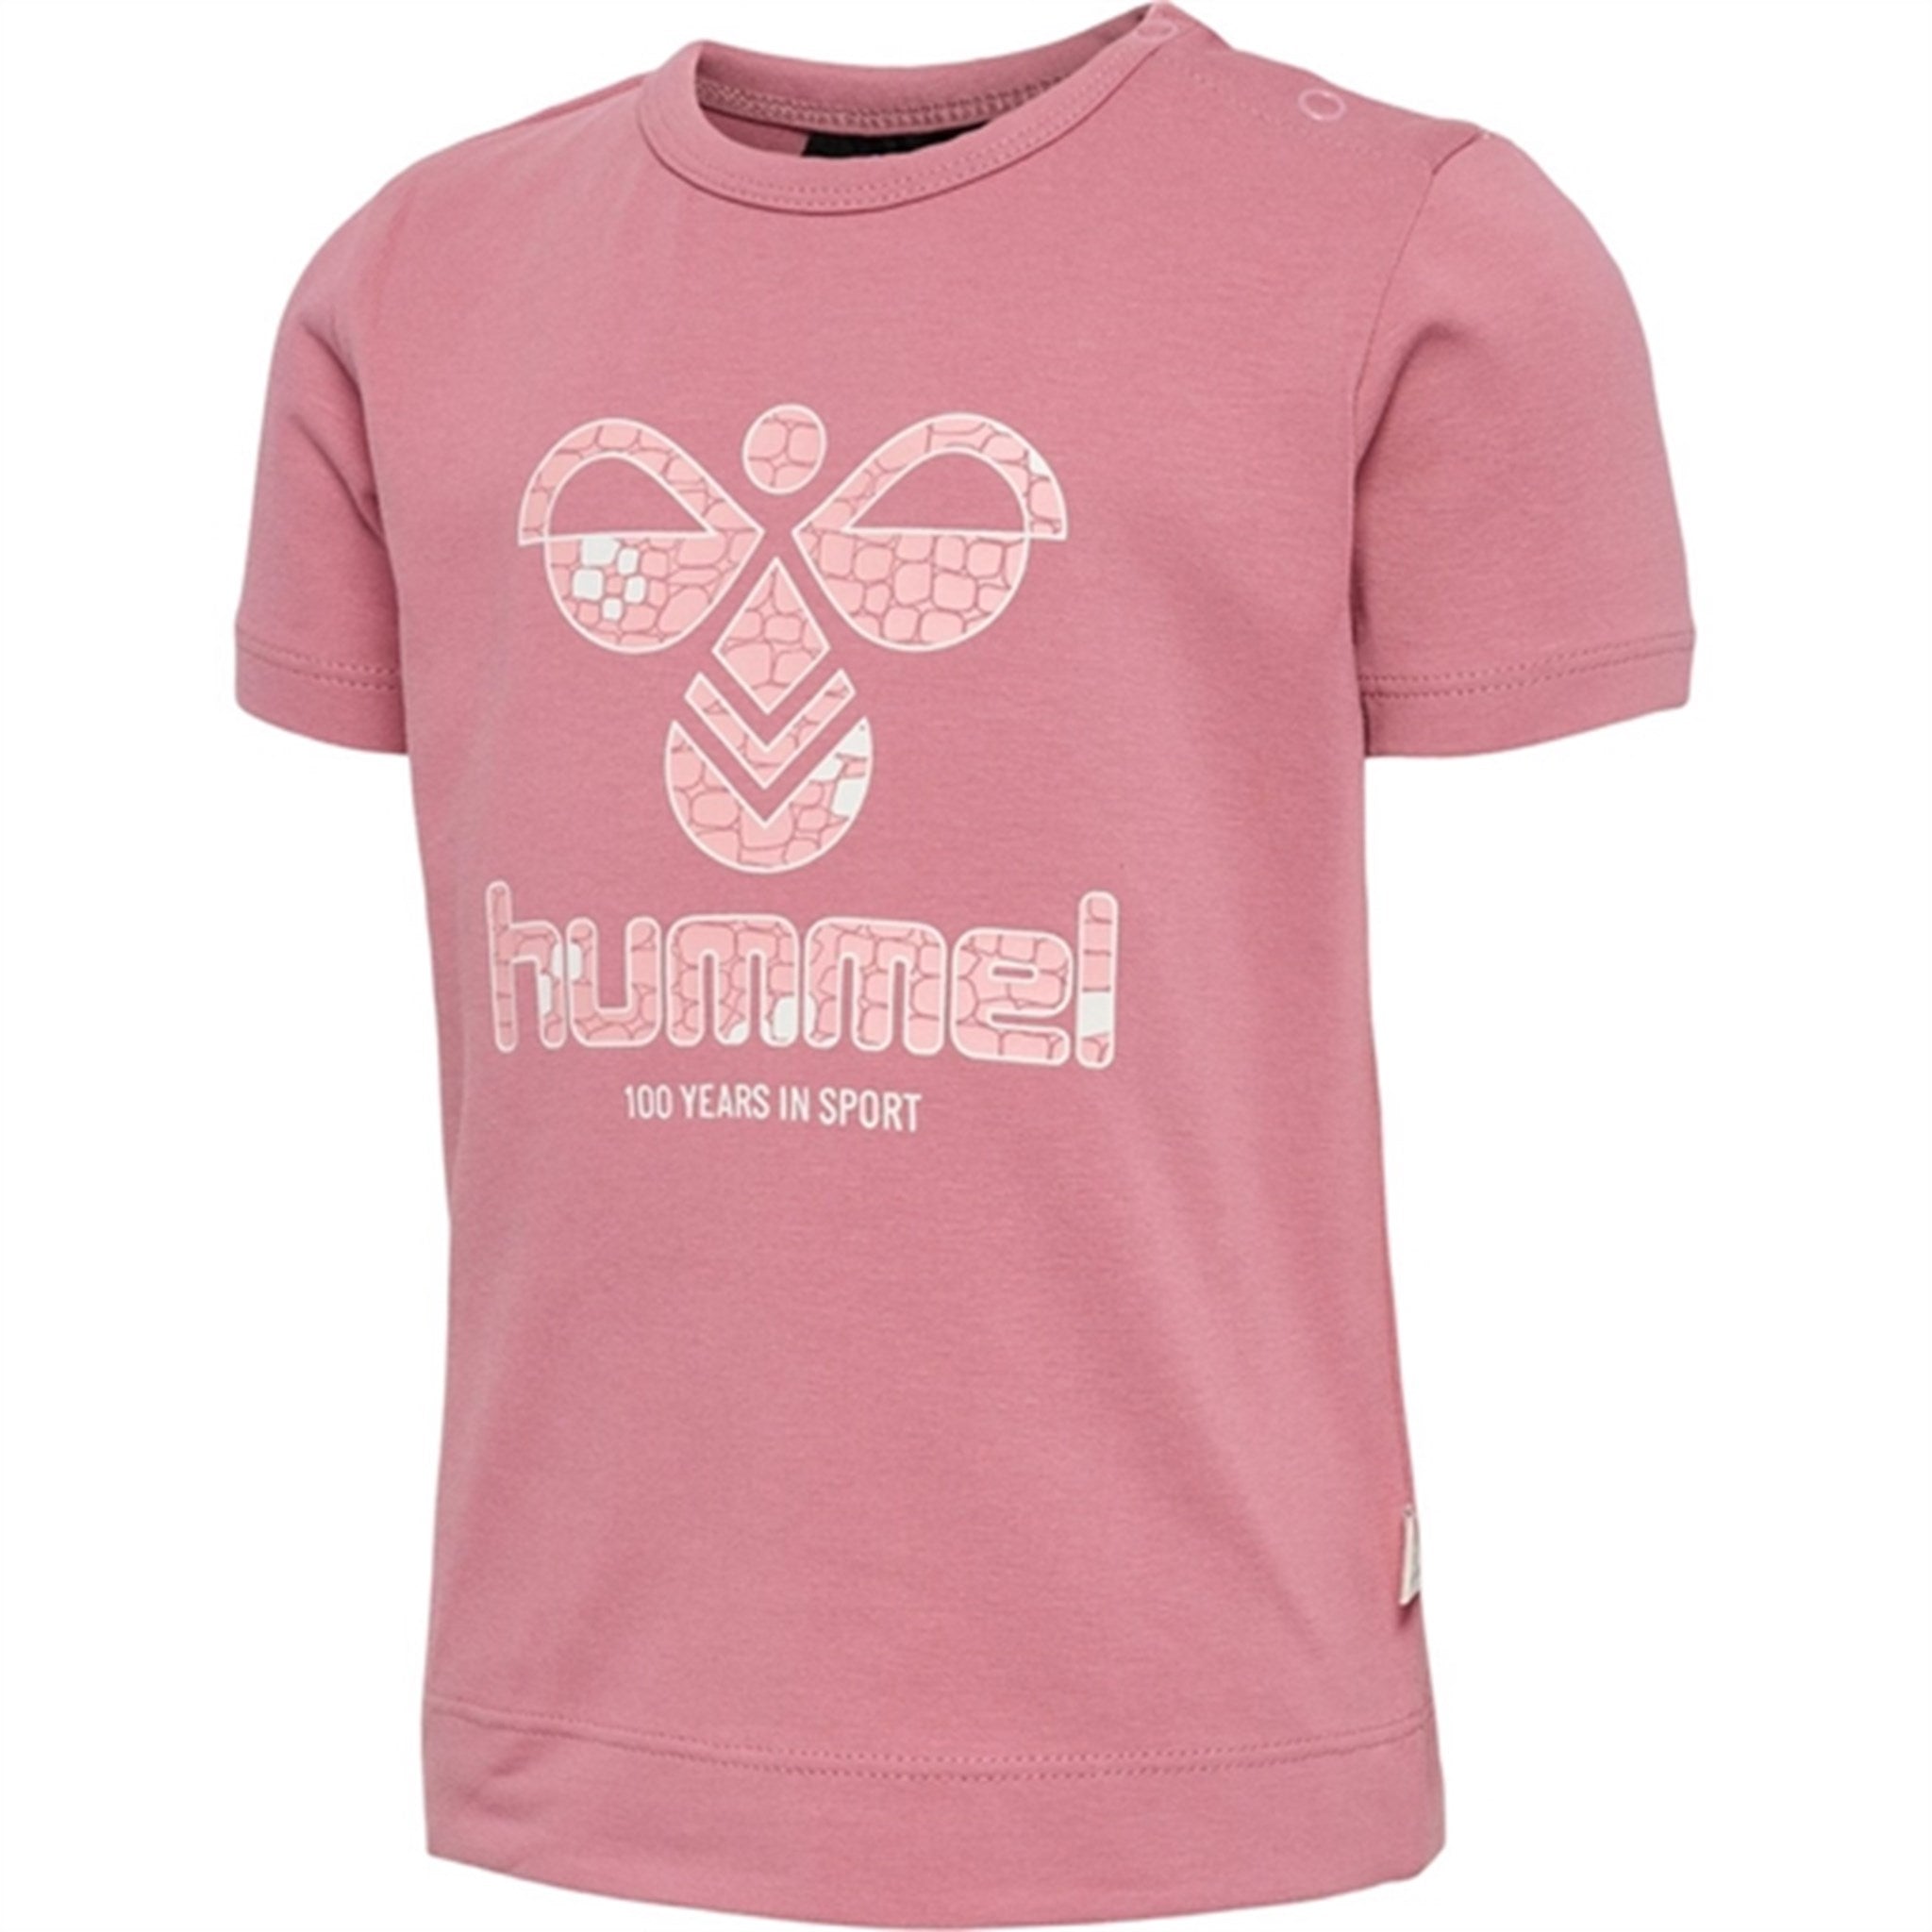 Hummel Mesa Rose Talya T-shirt S/S 3